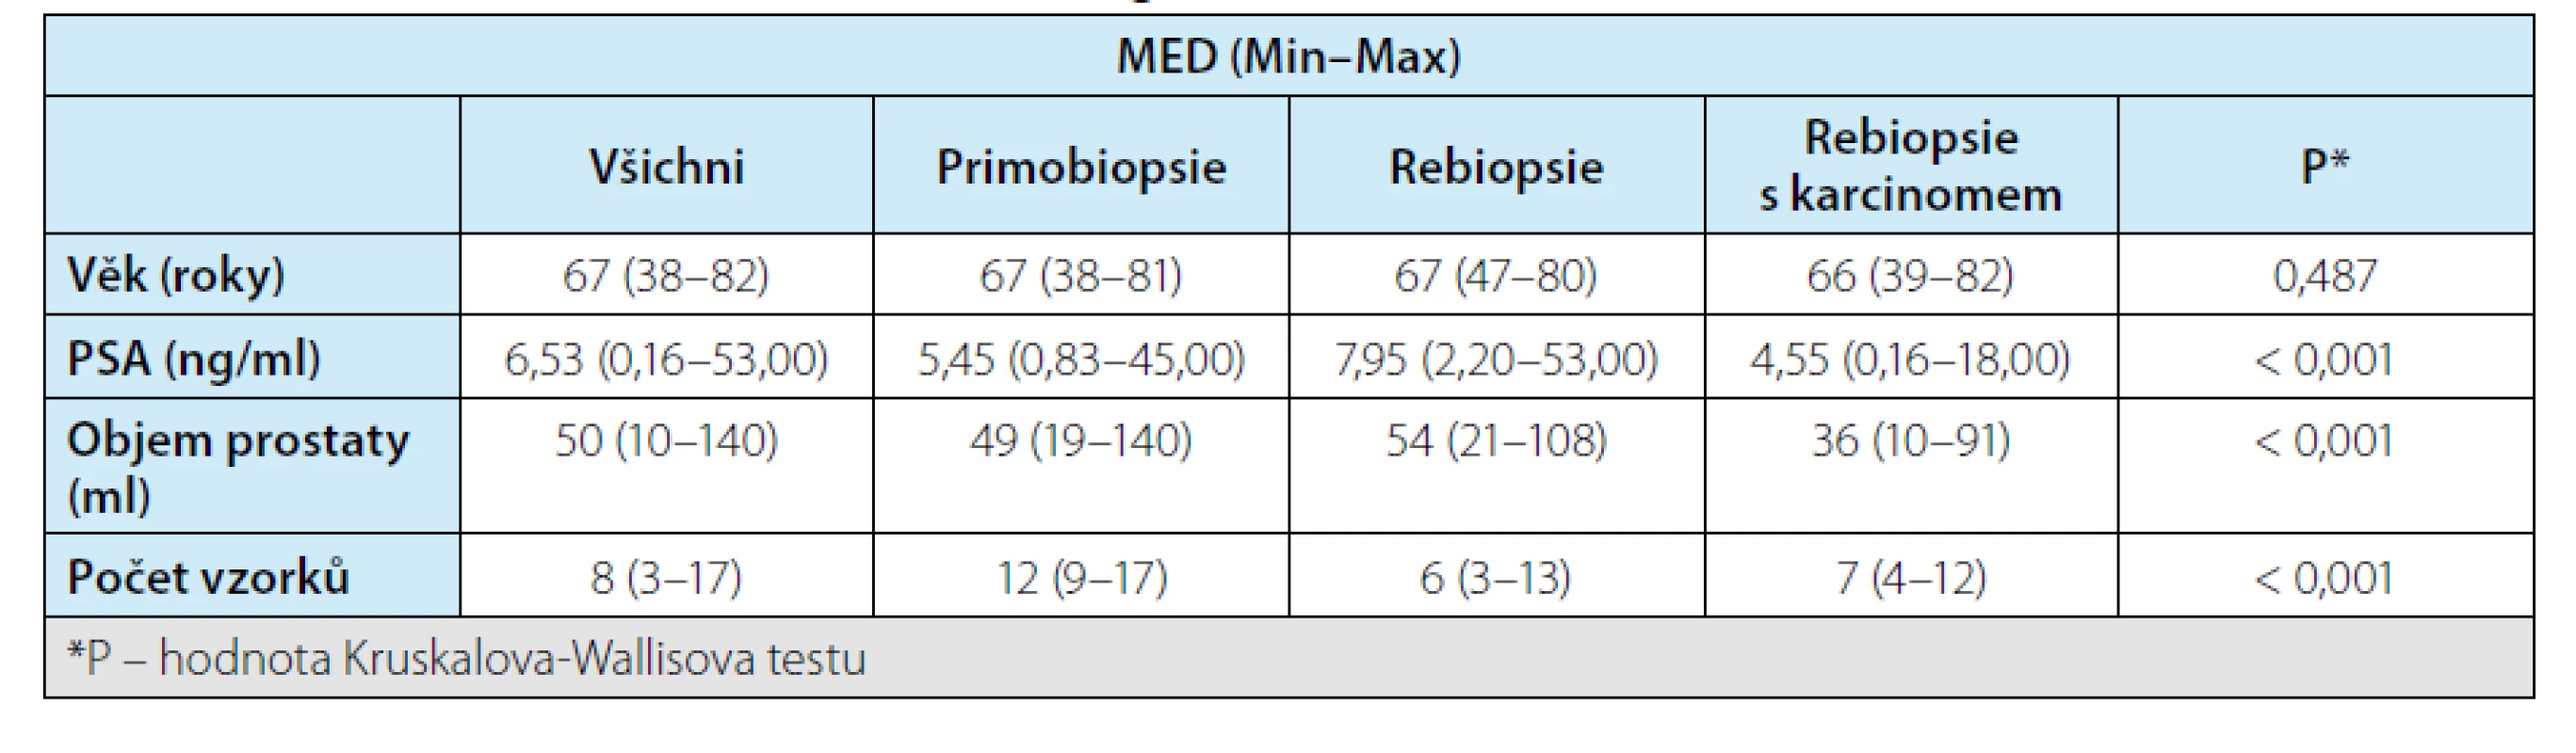 Parametry souboru pacientů medián (MED) a rozpětí, tj. minimum a maximum<br>
Tab. 1. Patient characteristics (median and range, i. e., minimum and maximum)